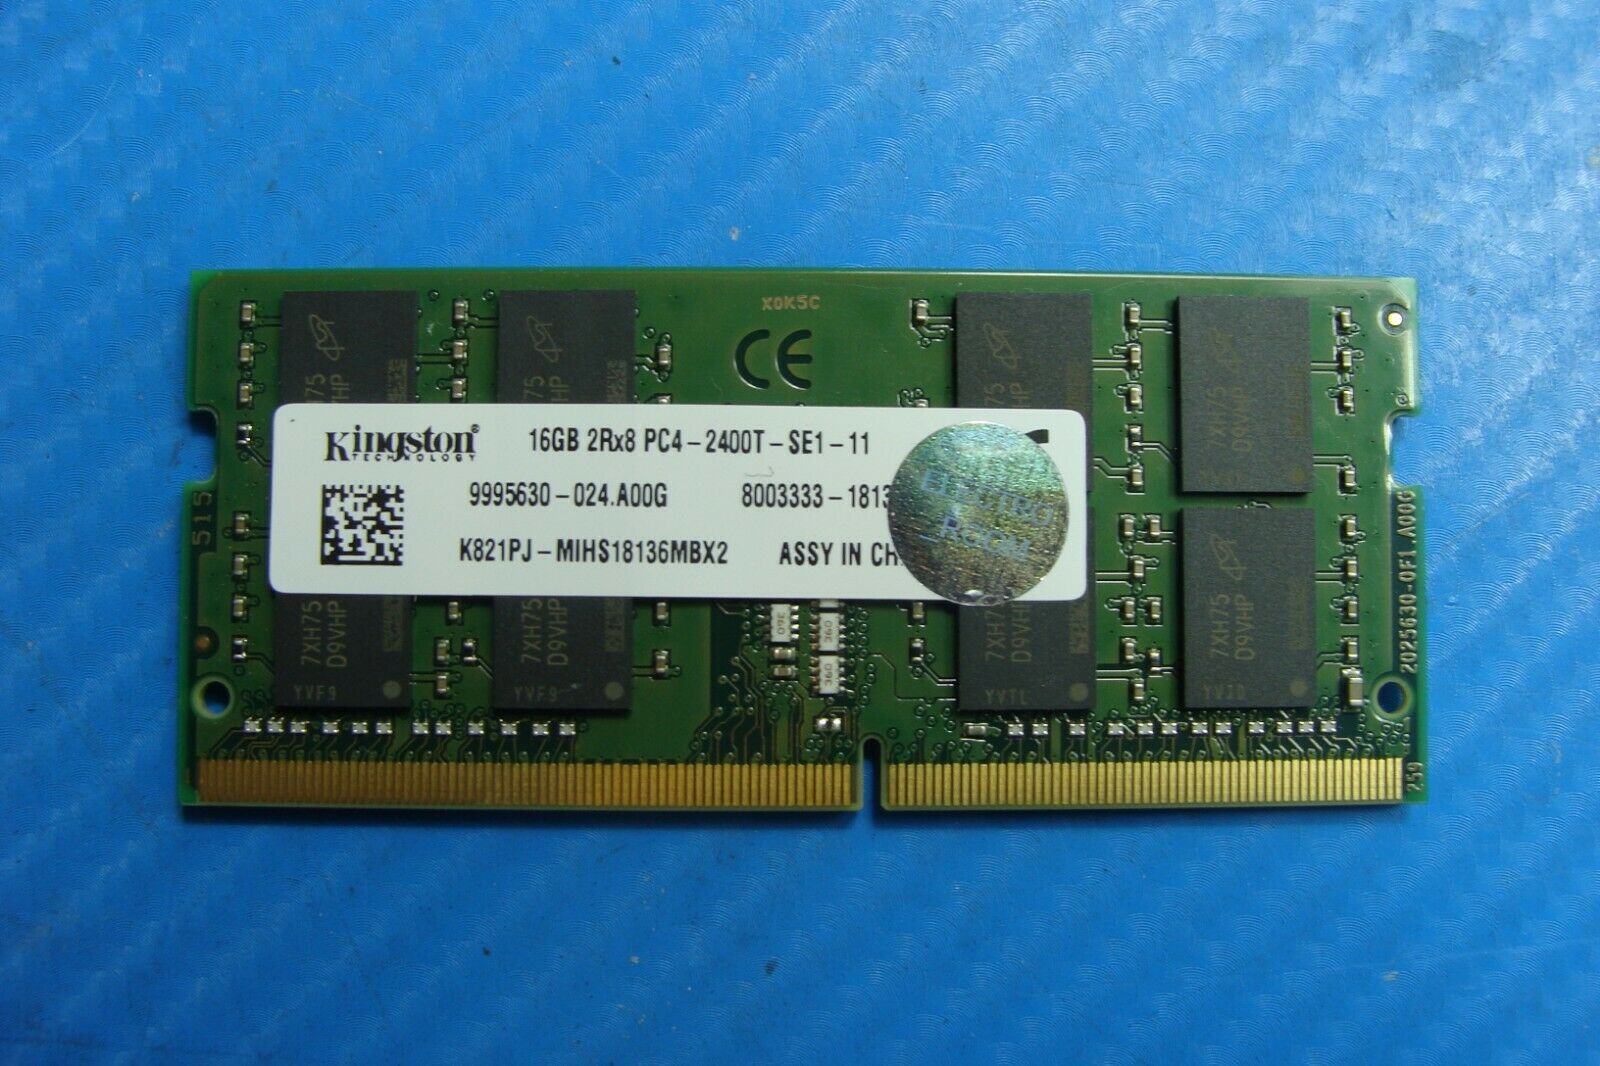 Dell 7520 S0-Dimm Kingston 16GB Memory Ram pc4-2400t-se1-11 9995630-024.a00g 